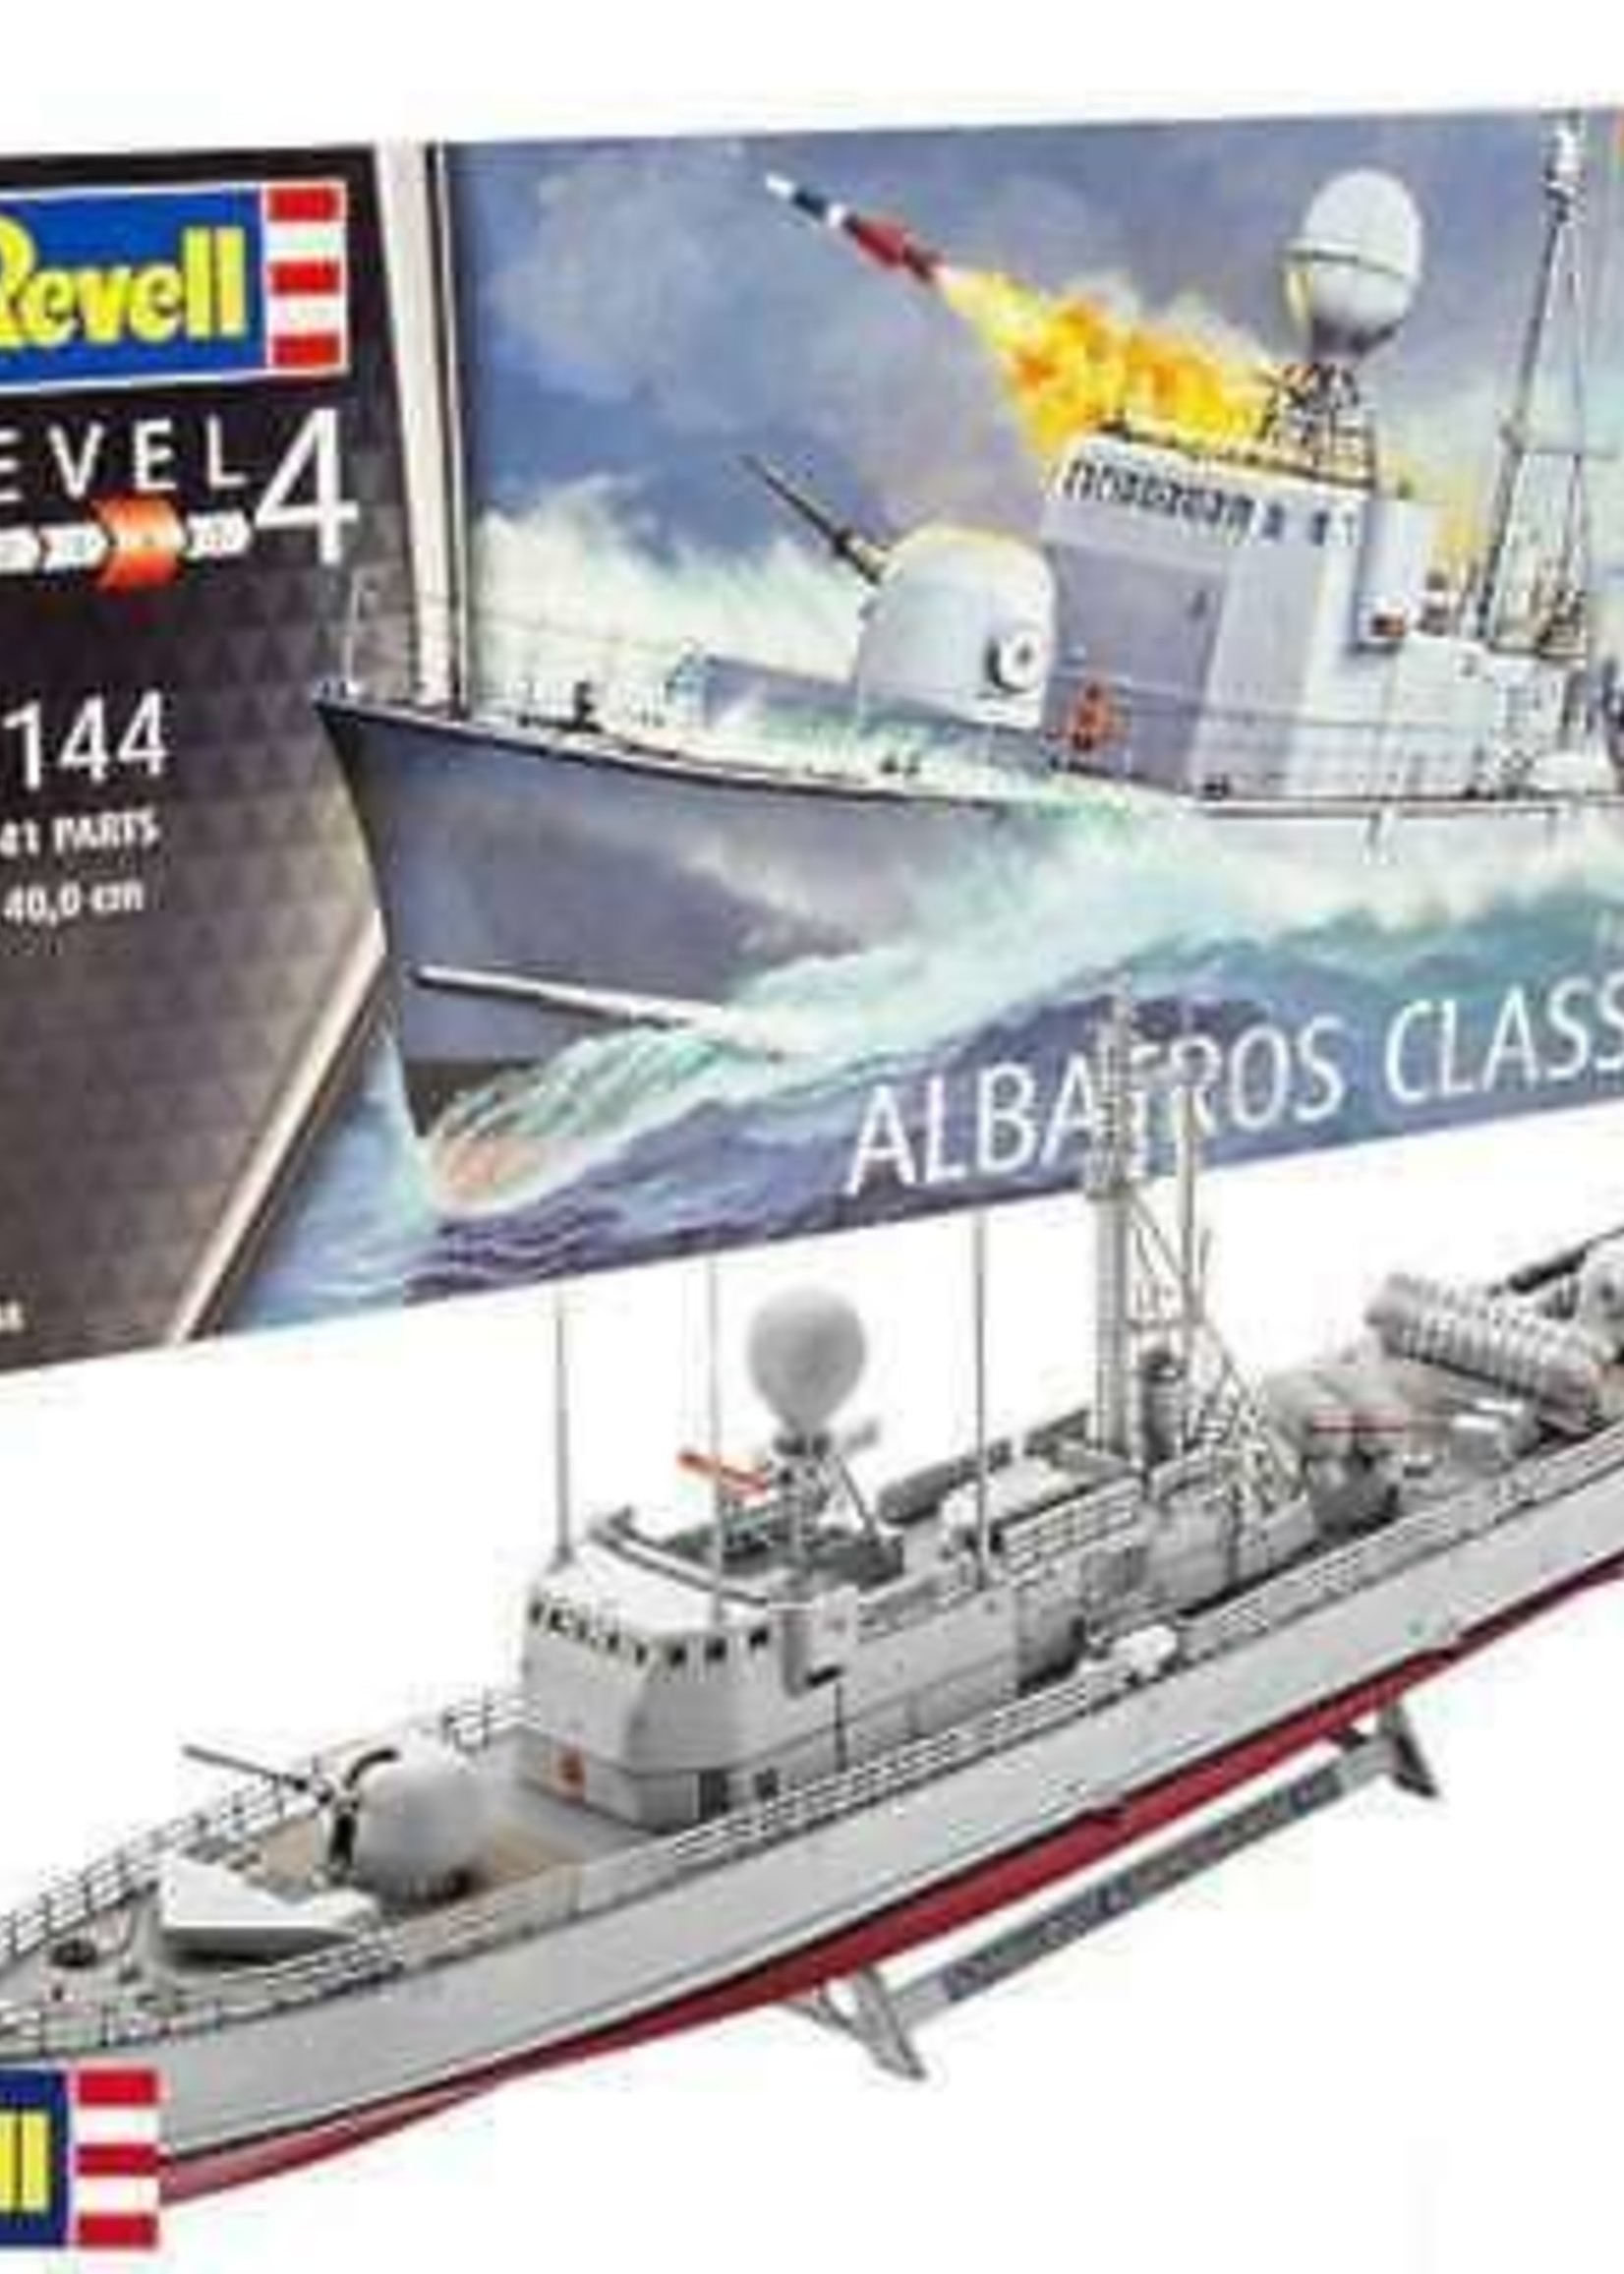 Revell Albatros class 143 1/144